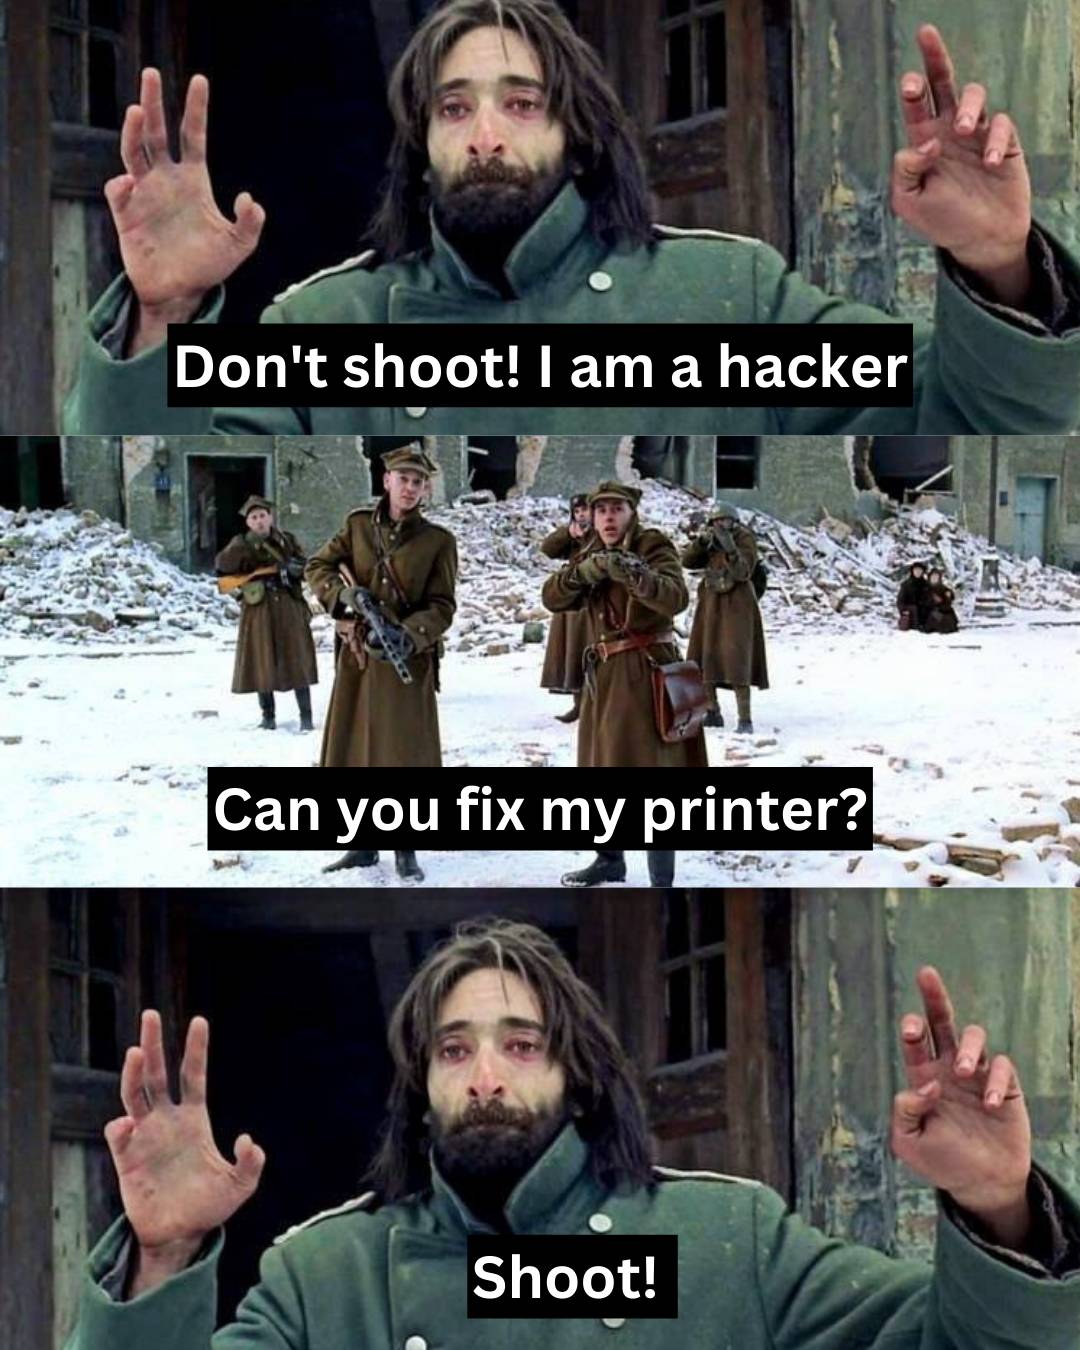 No way he's fixing a printer